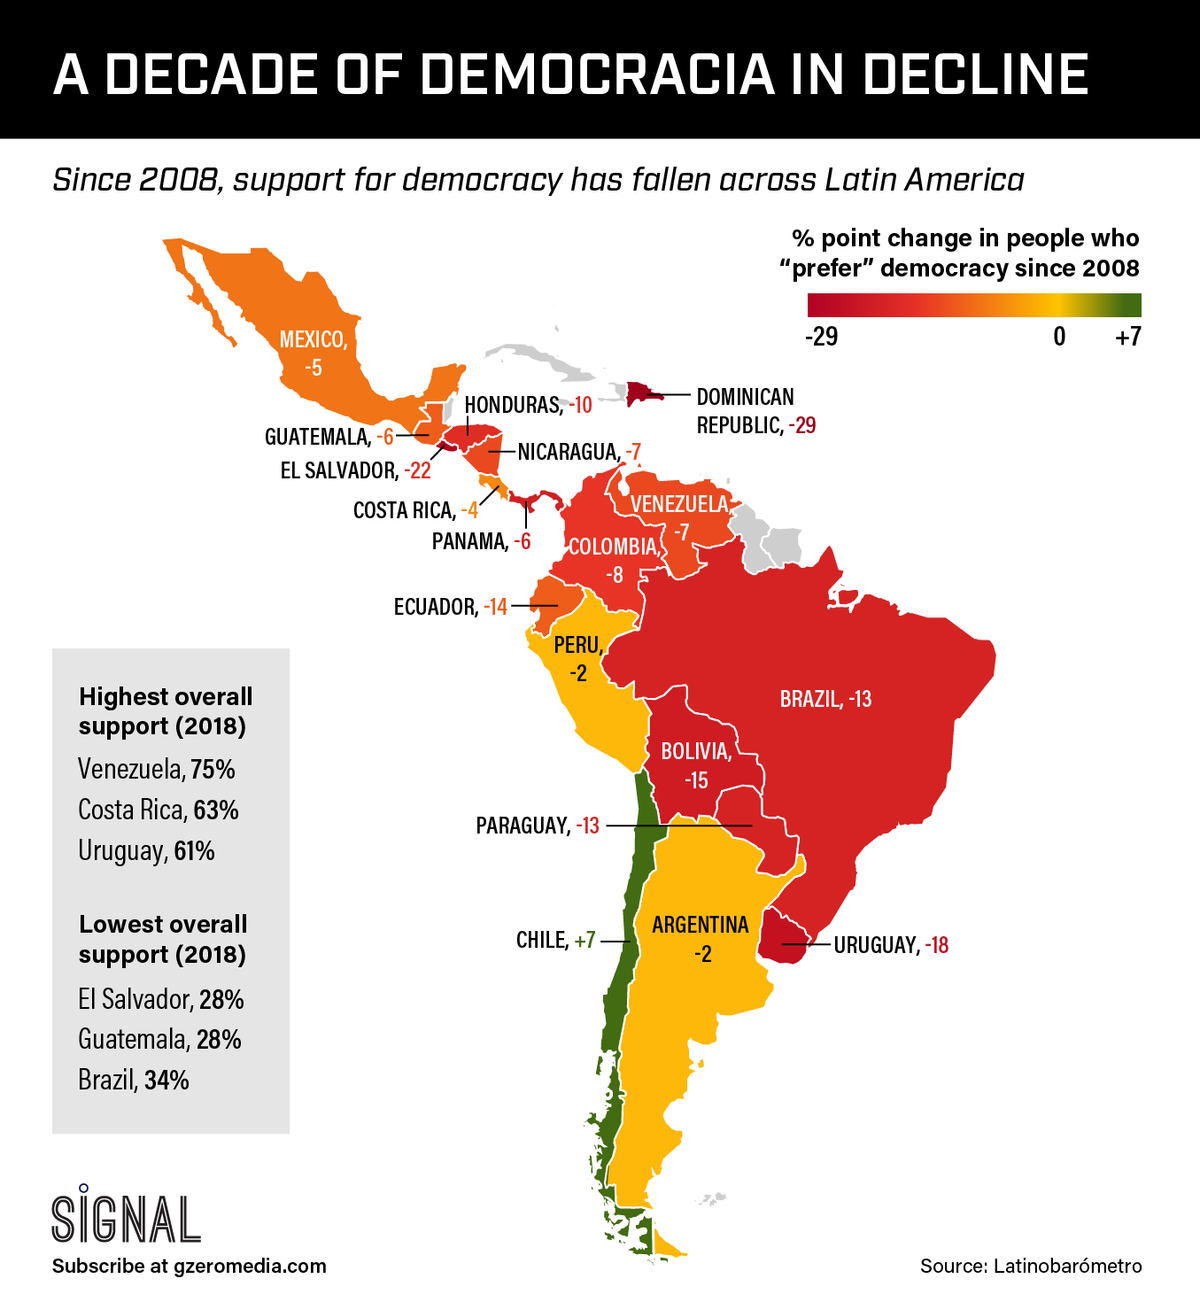 DEMOCRACIA IN DECLINE?